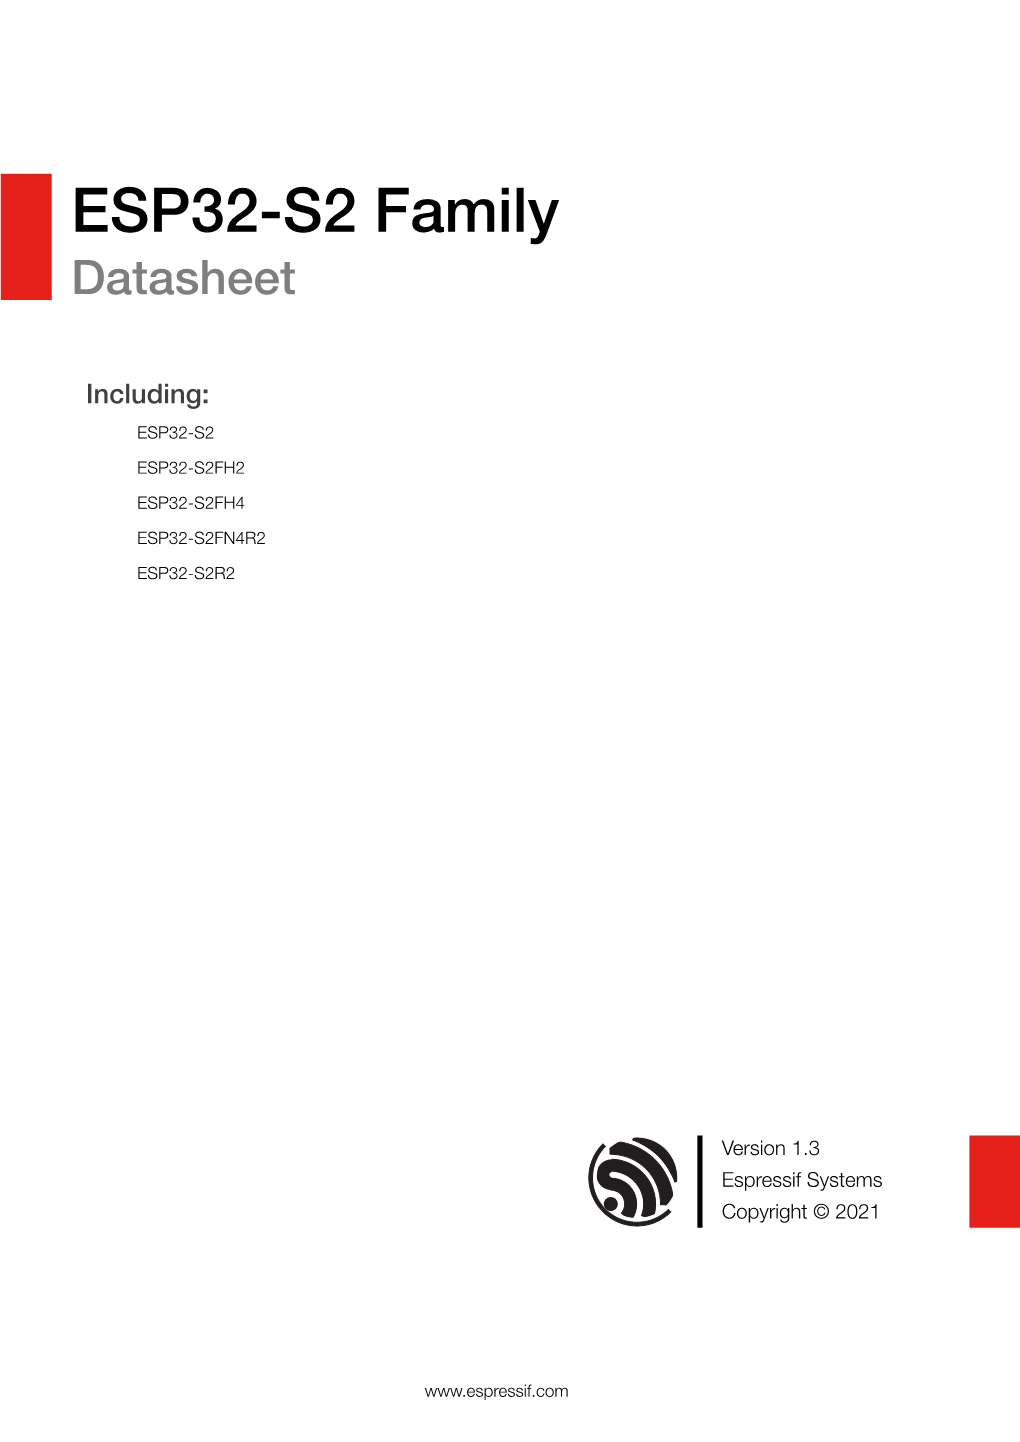 ESP32-S2 Family Datasheet